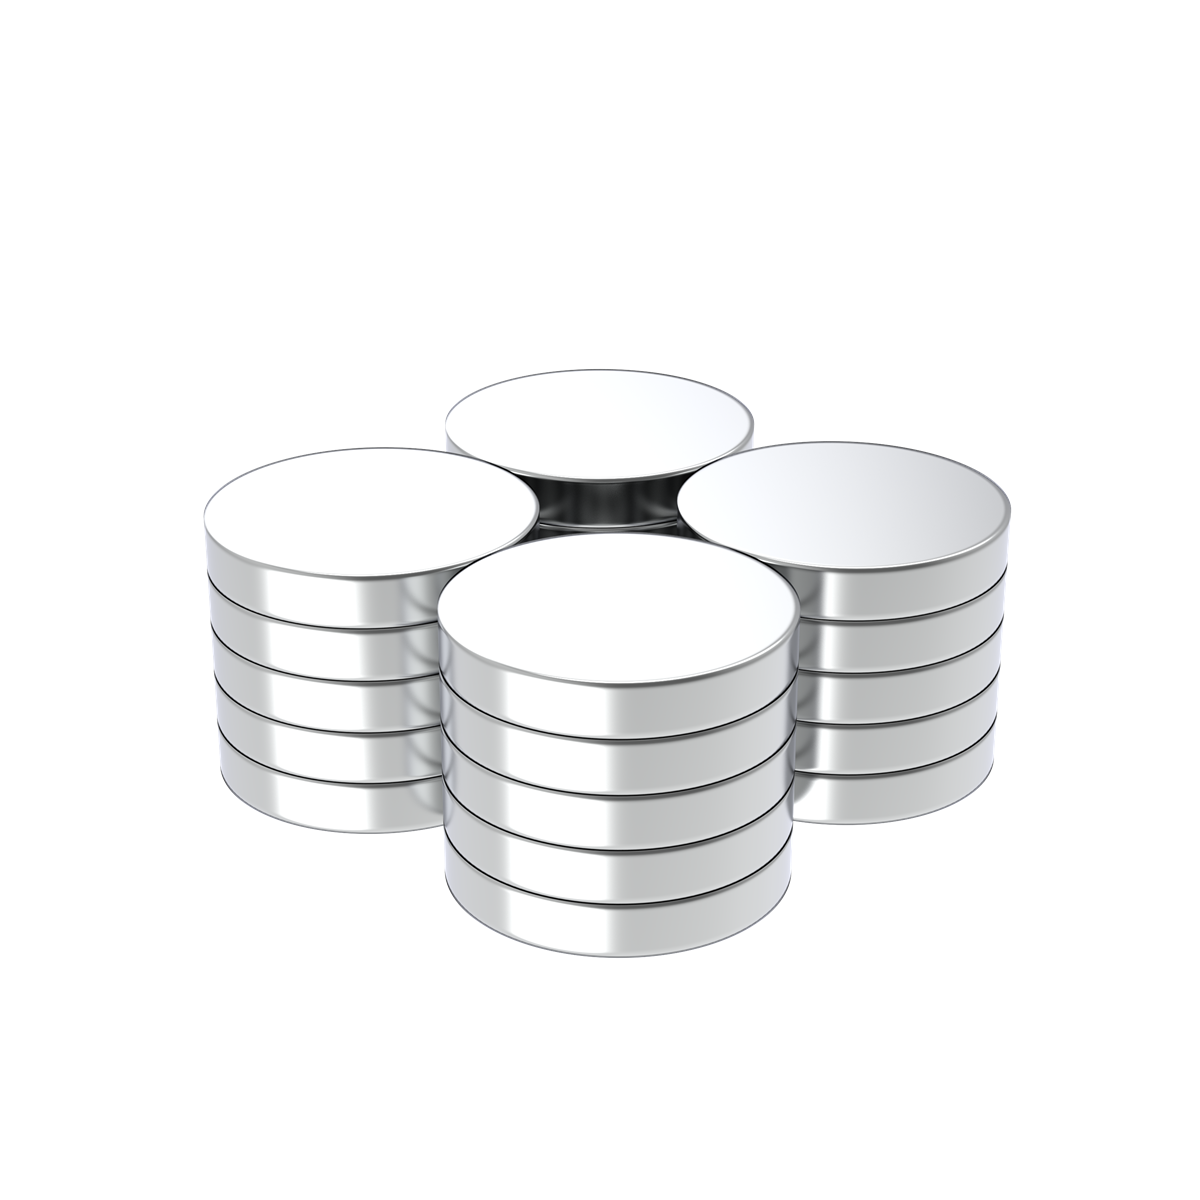 3/4 x 1/8 Inch Neodymium Rare Earth Disc Magnets N52 (20 Pack) - Liftsun  Magnets Company